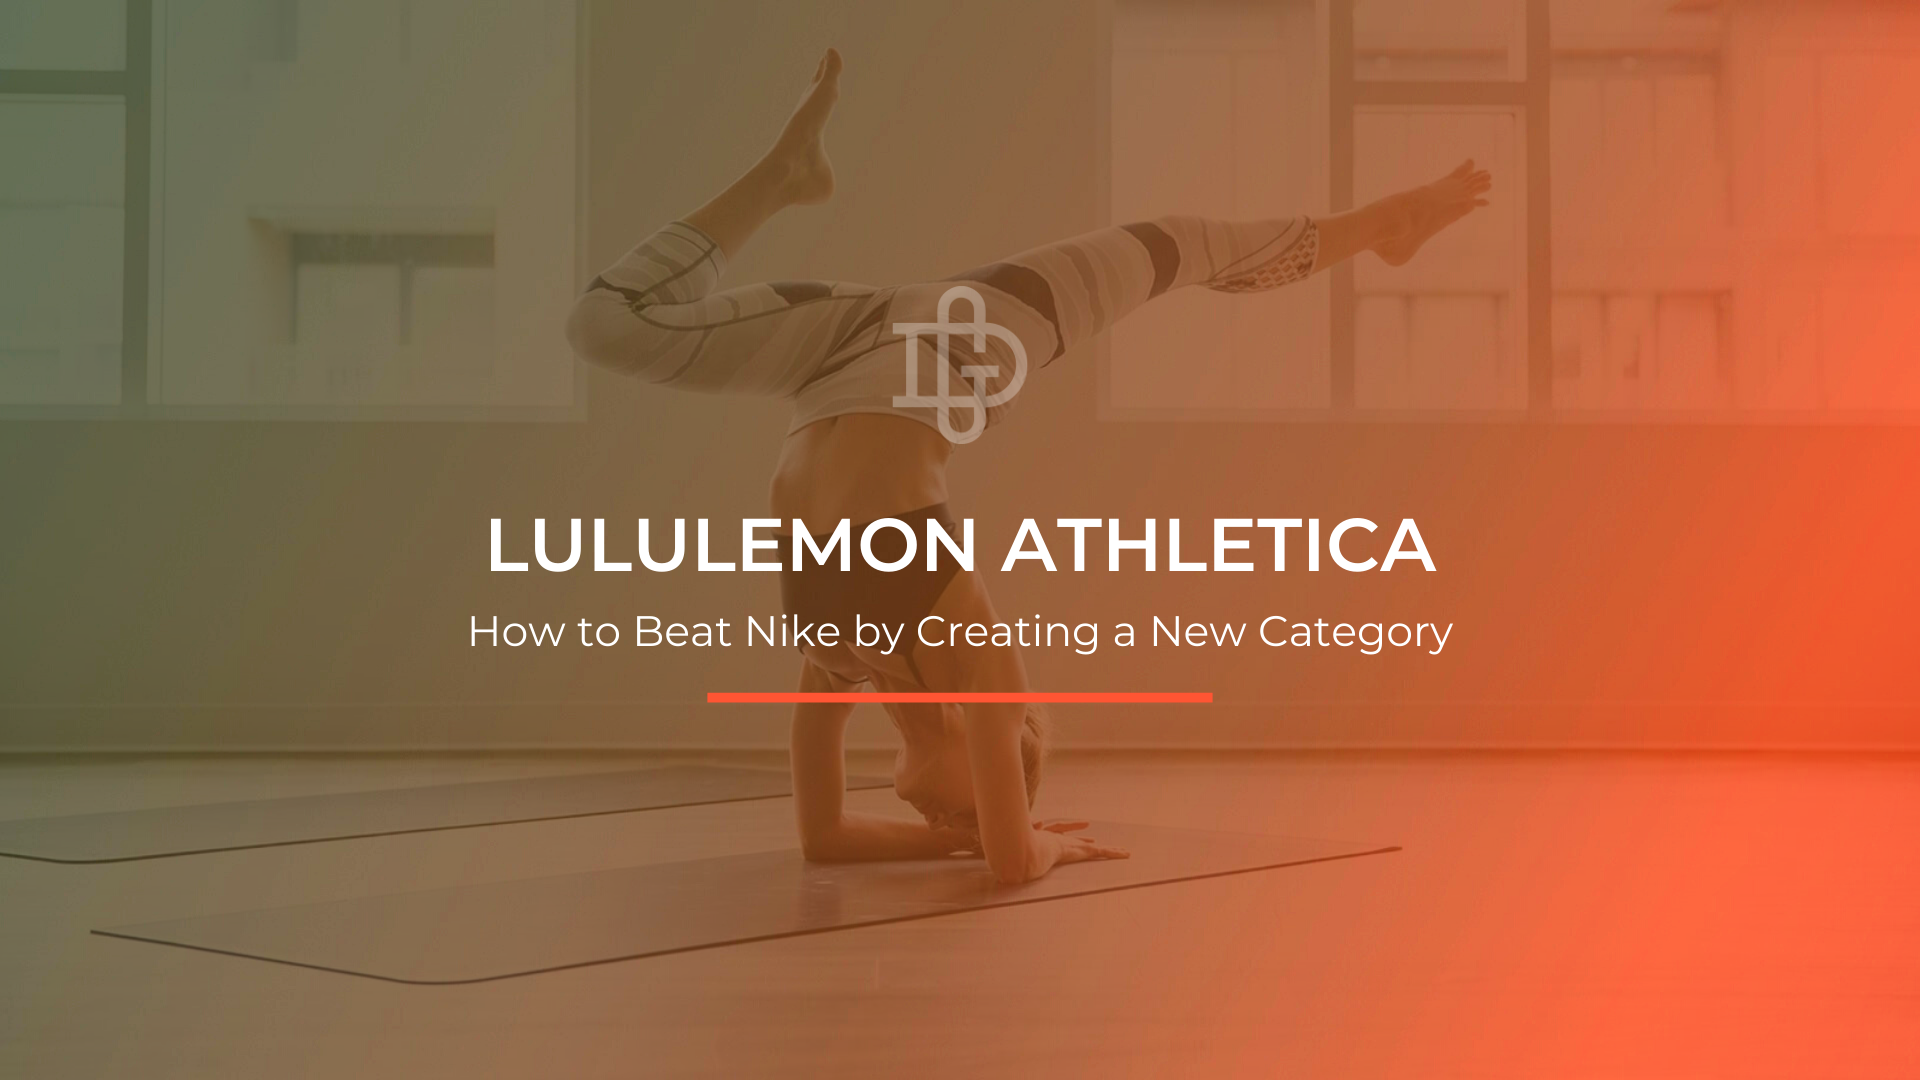 Case Study, How Lululemon Built Athleisure's Leading Brand